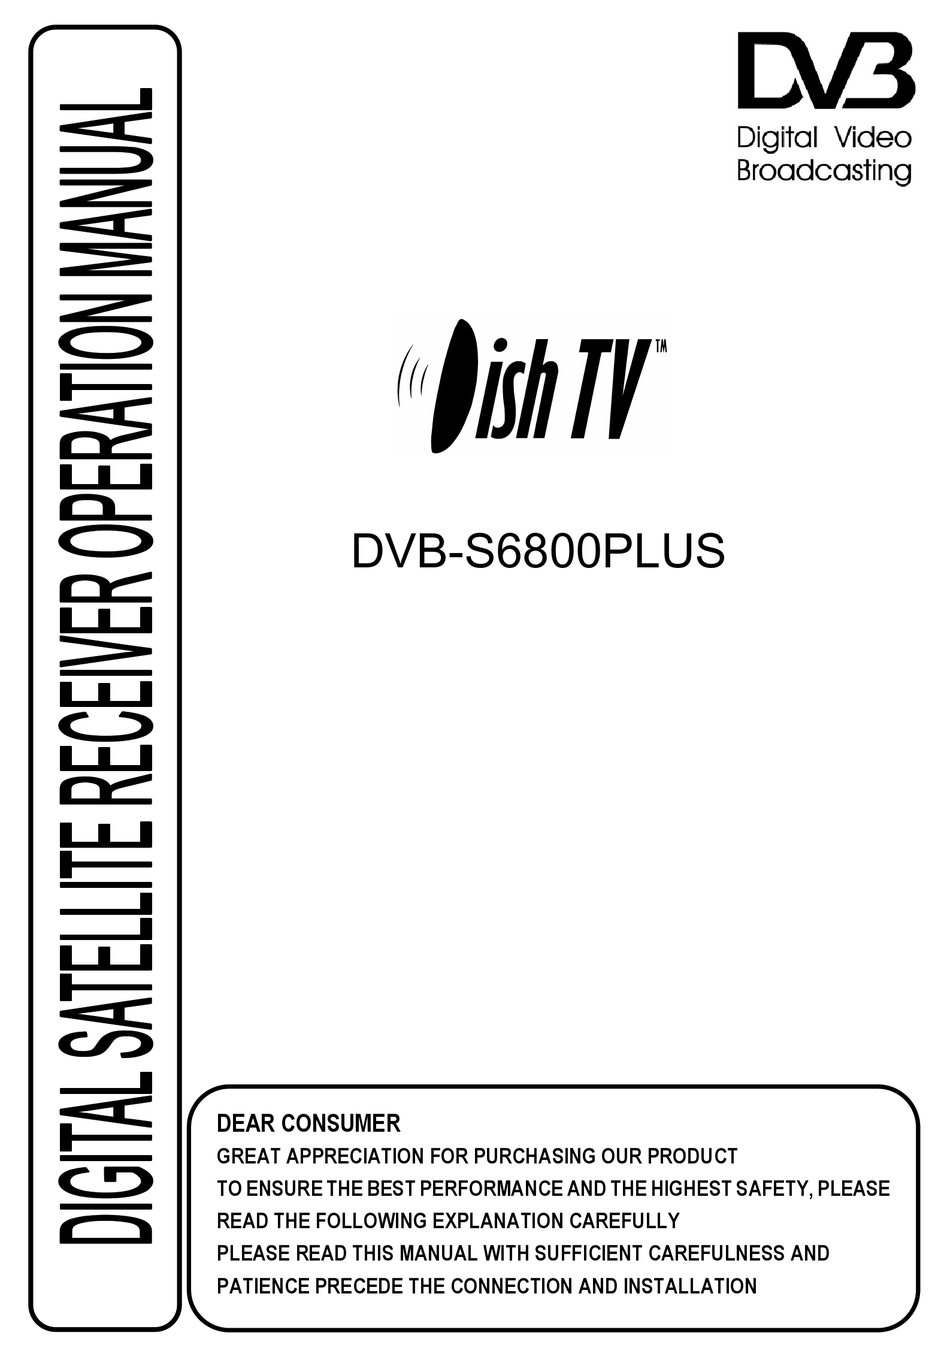 dish-tv-dvb-s6800plus-operation-manual-pdf-download-manualslib